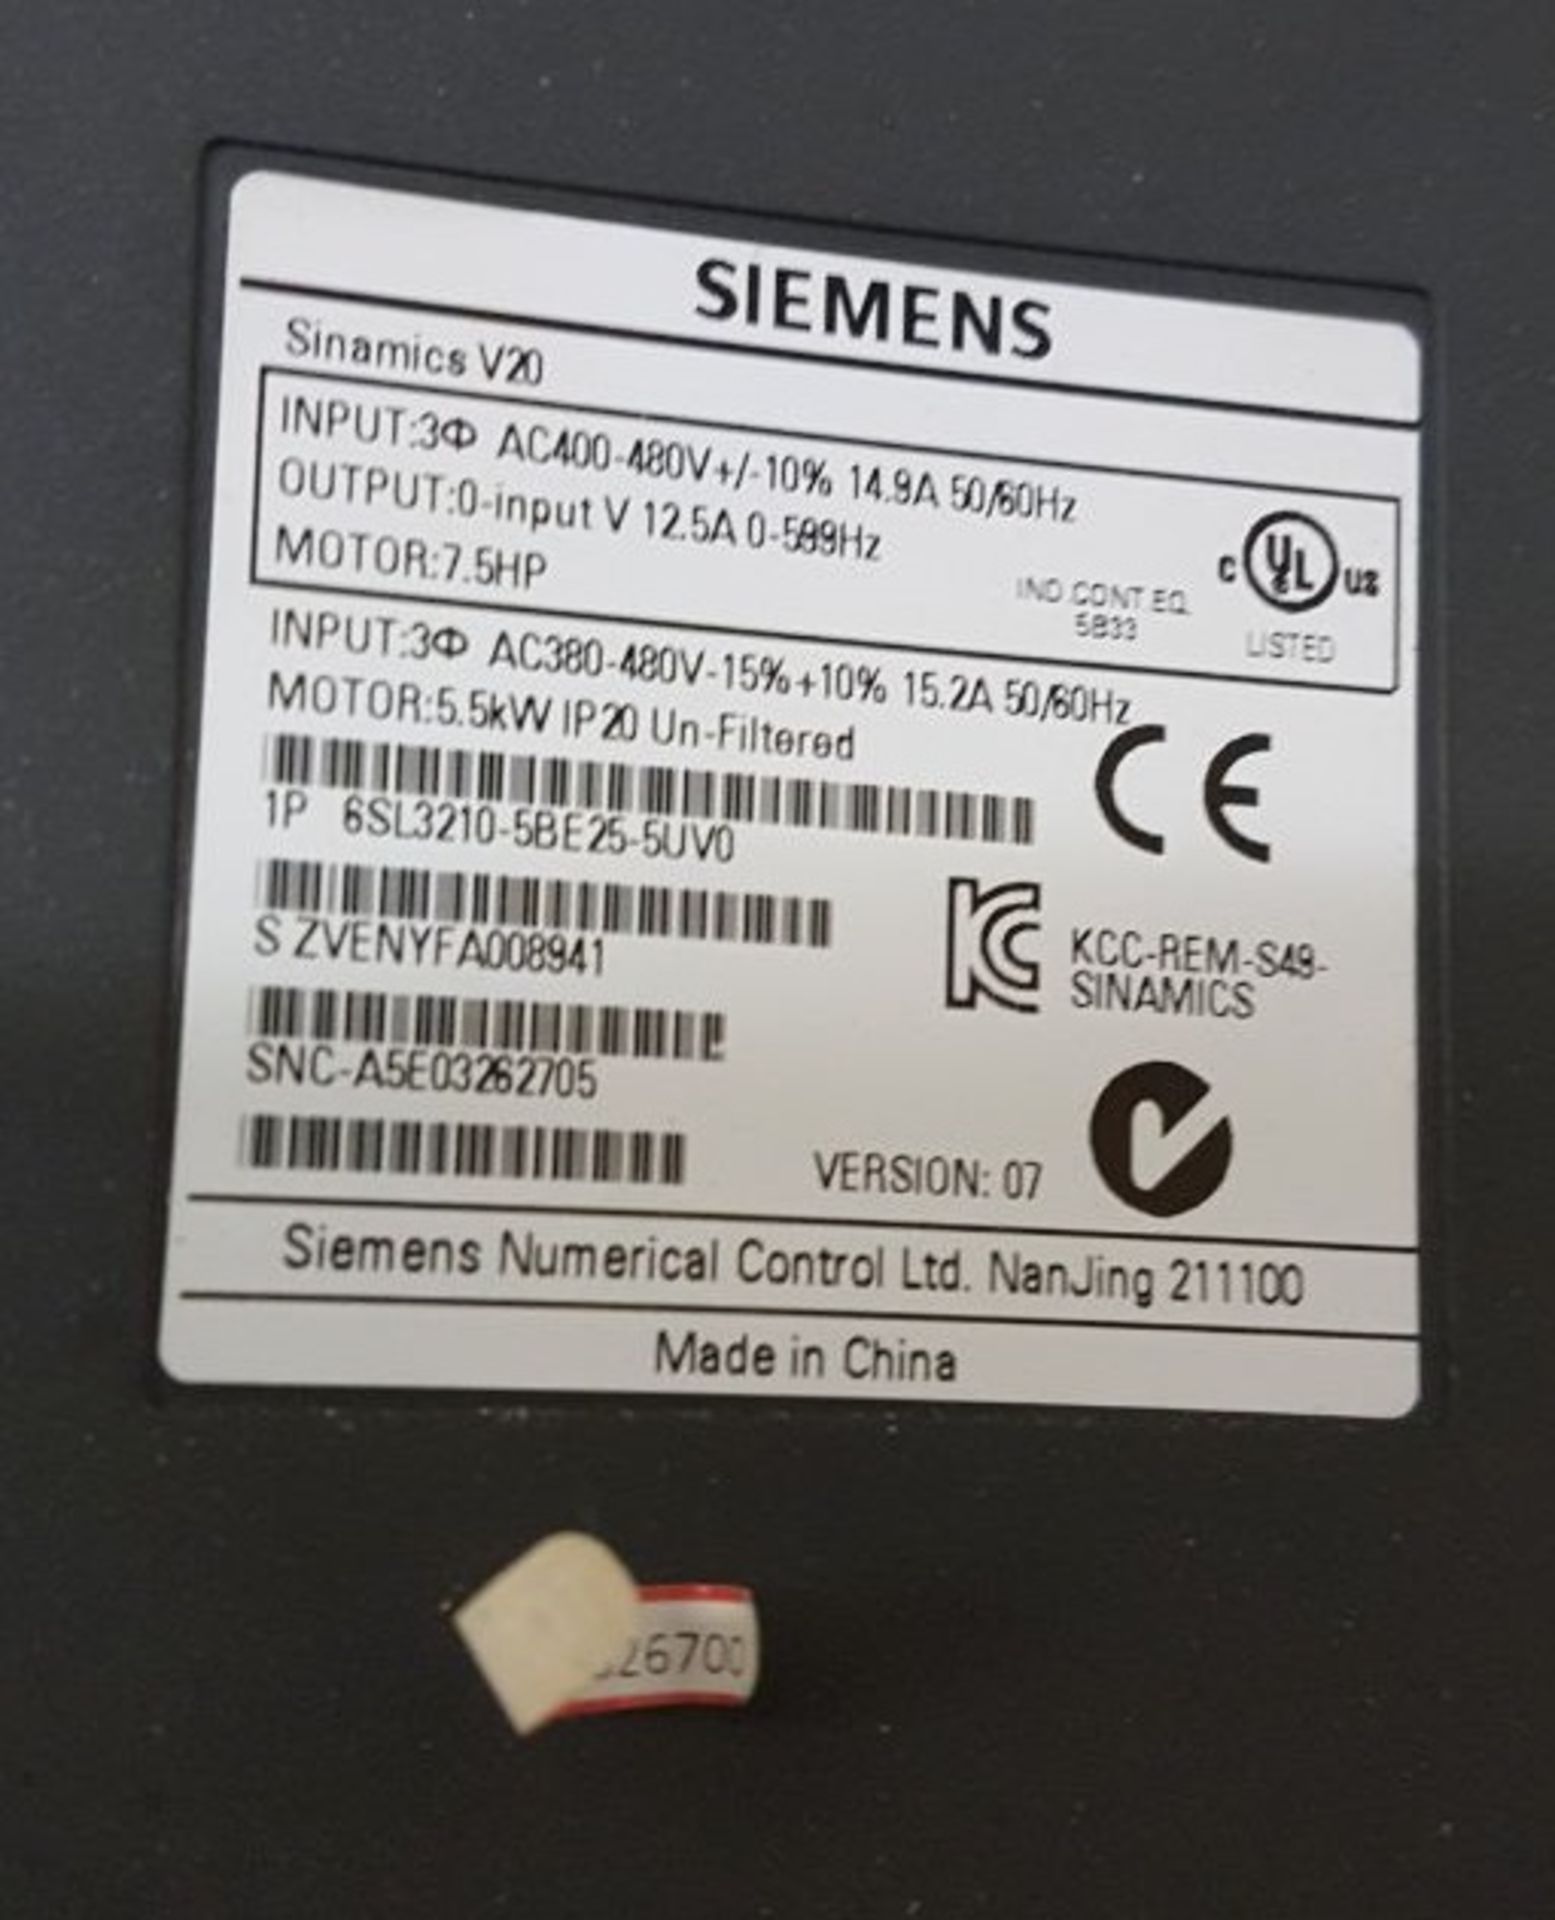 1 x 5.5kW Siemens Sinamics V20 inverter - Image 2 of 2